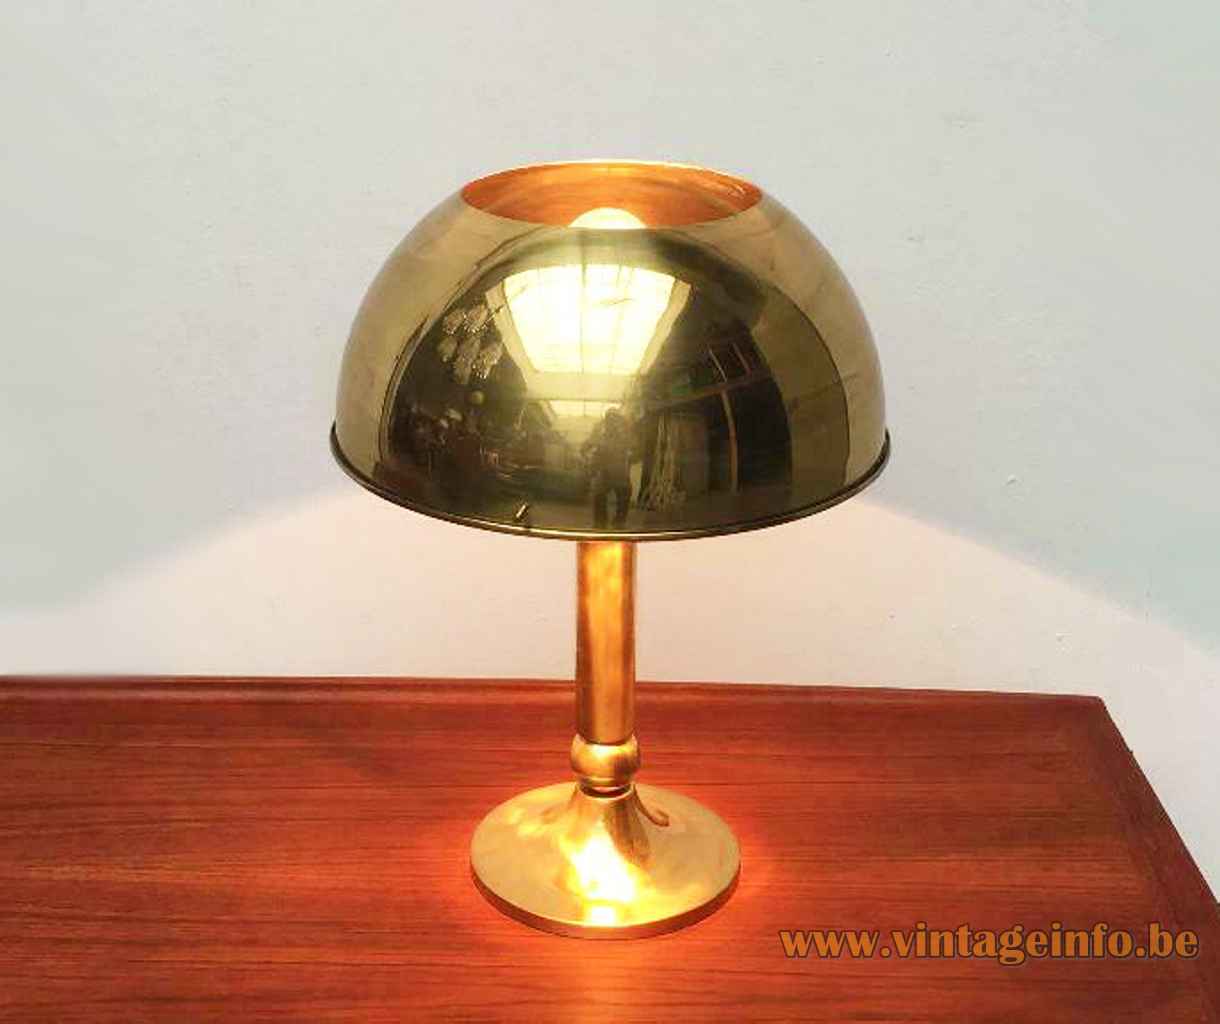 Florian Schultz brass table lamp round base & rod round mushroom lampshade 1970s 1980s Germany E27 socket